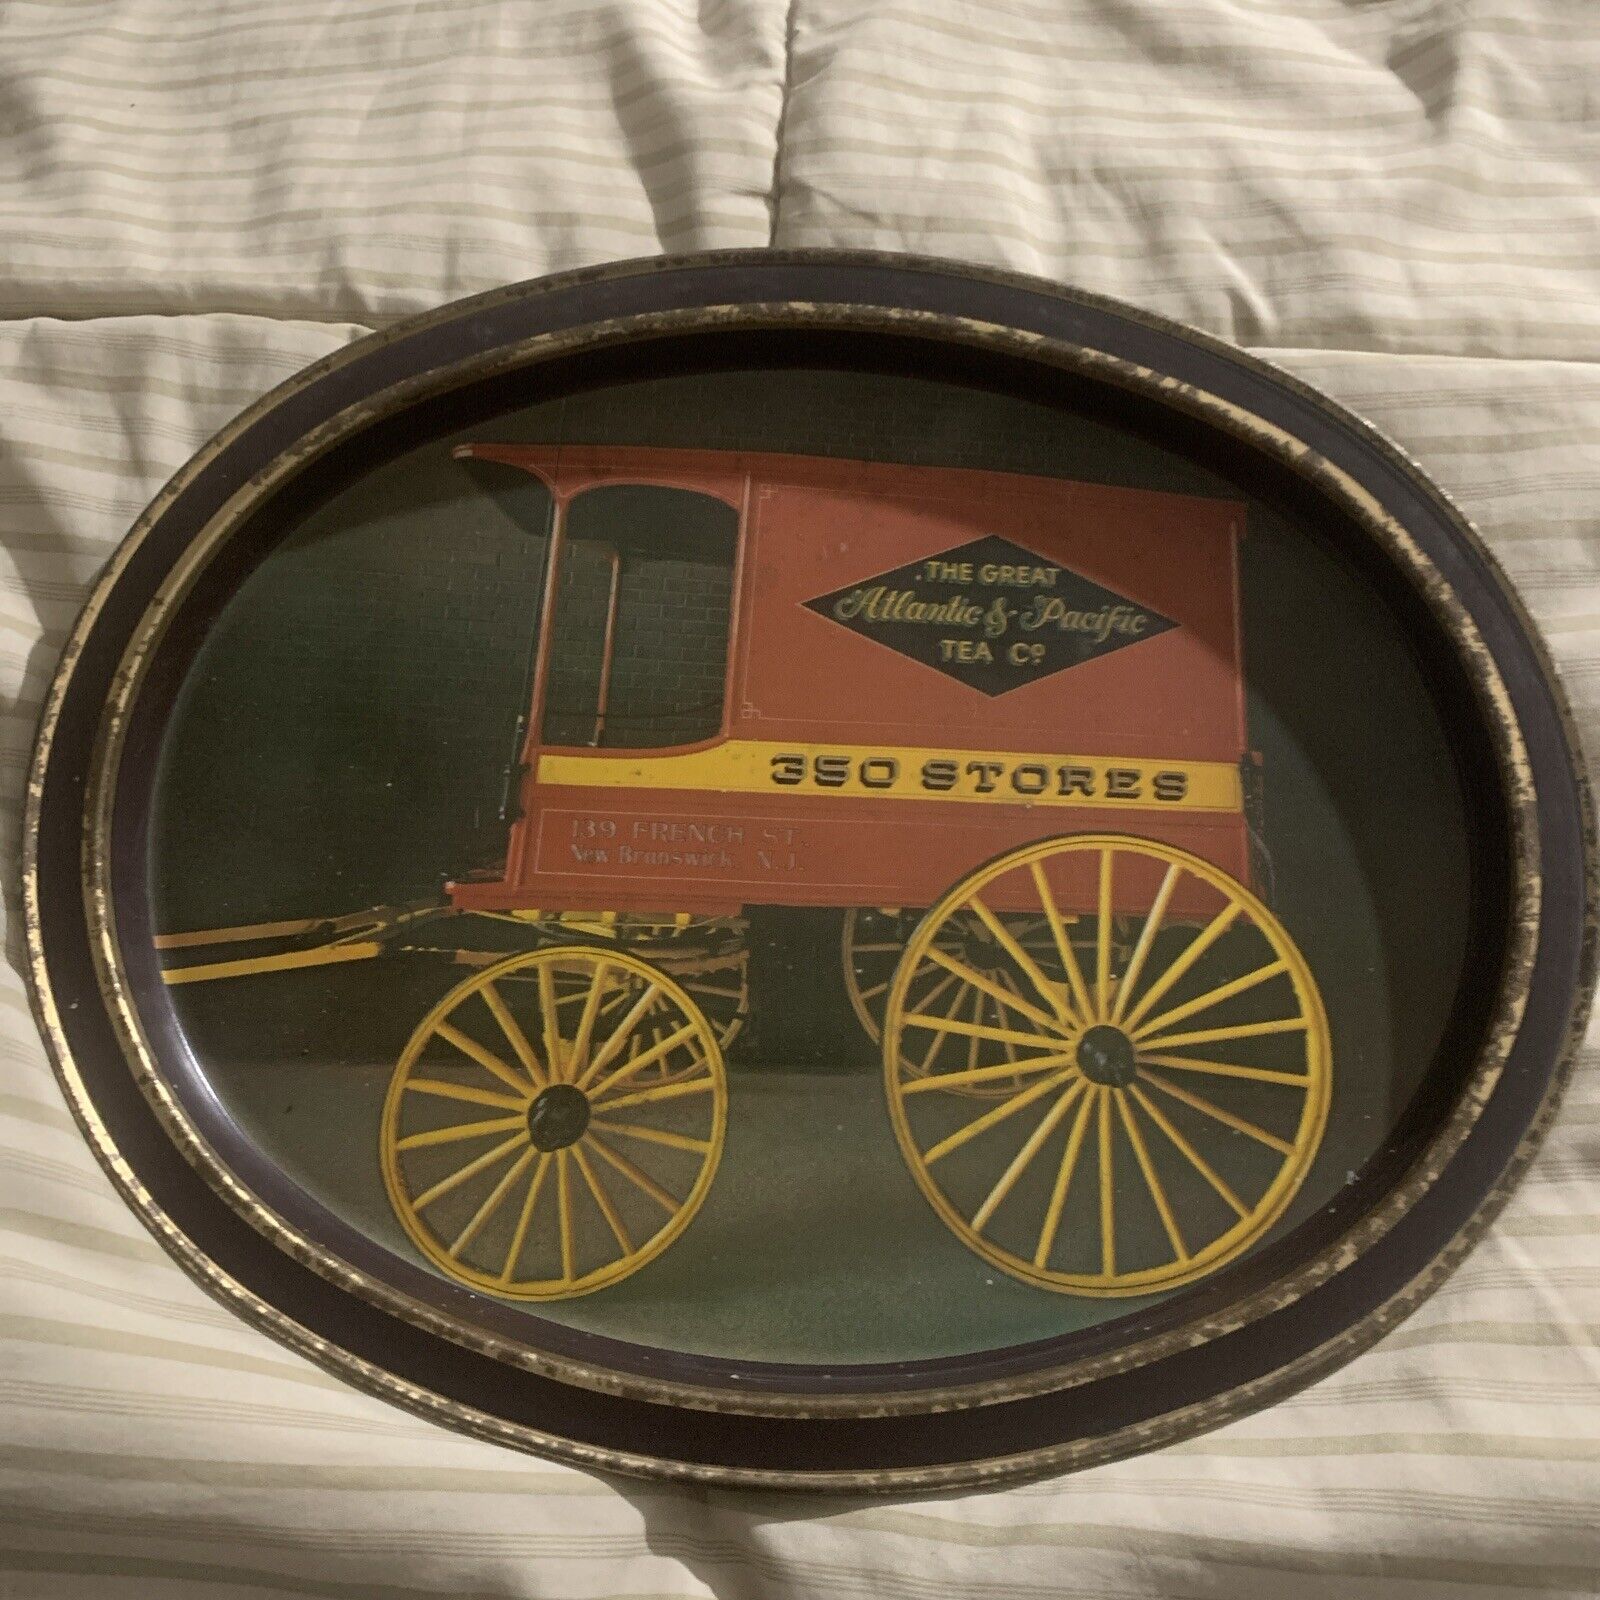 Antique- The Great Atlantic Pacific Tea Company Plate